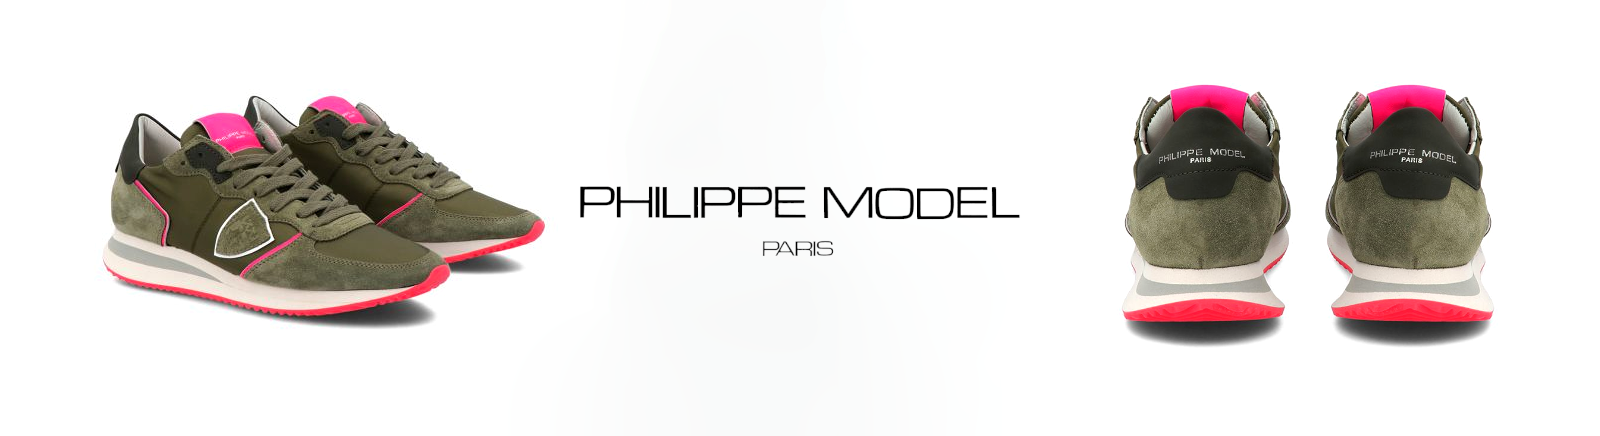 PHILIPPE MODEL Damenschuhe kaufen im GISY Online Shop